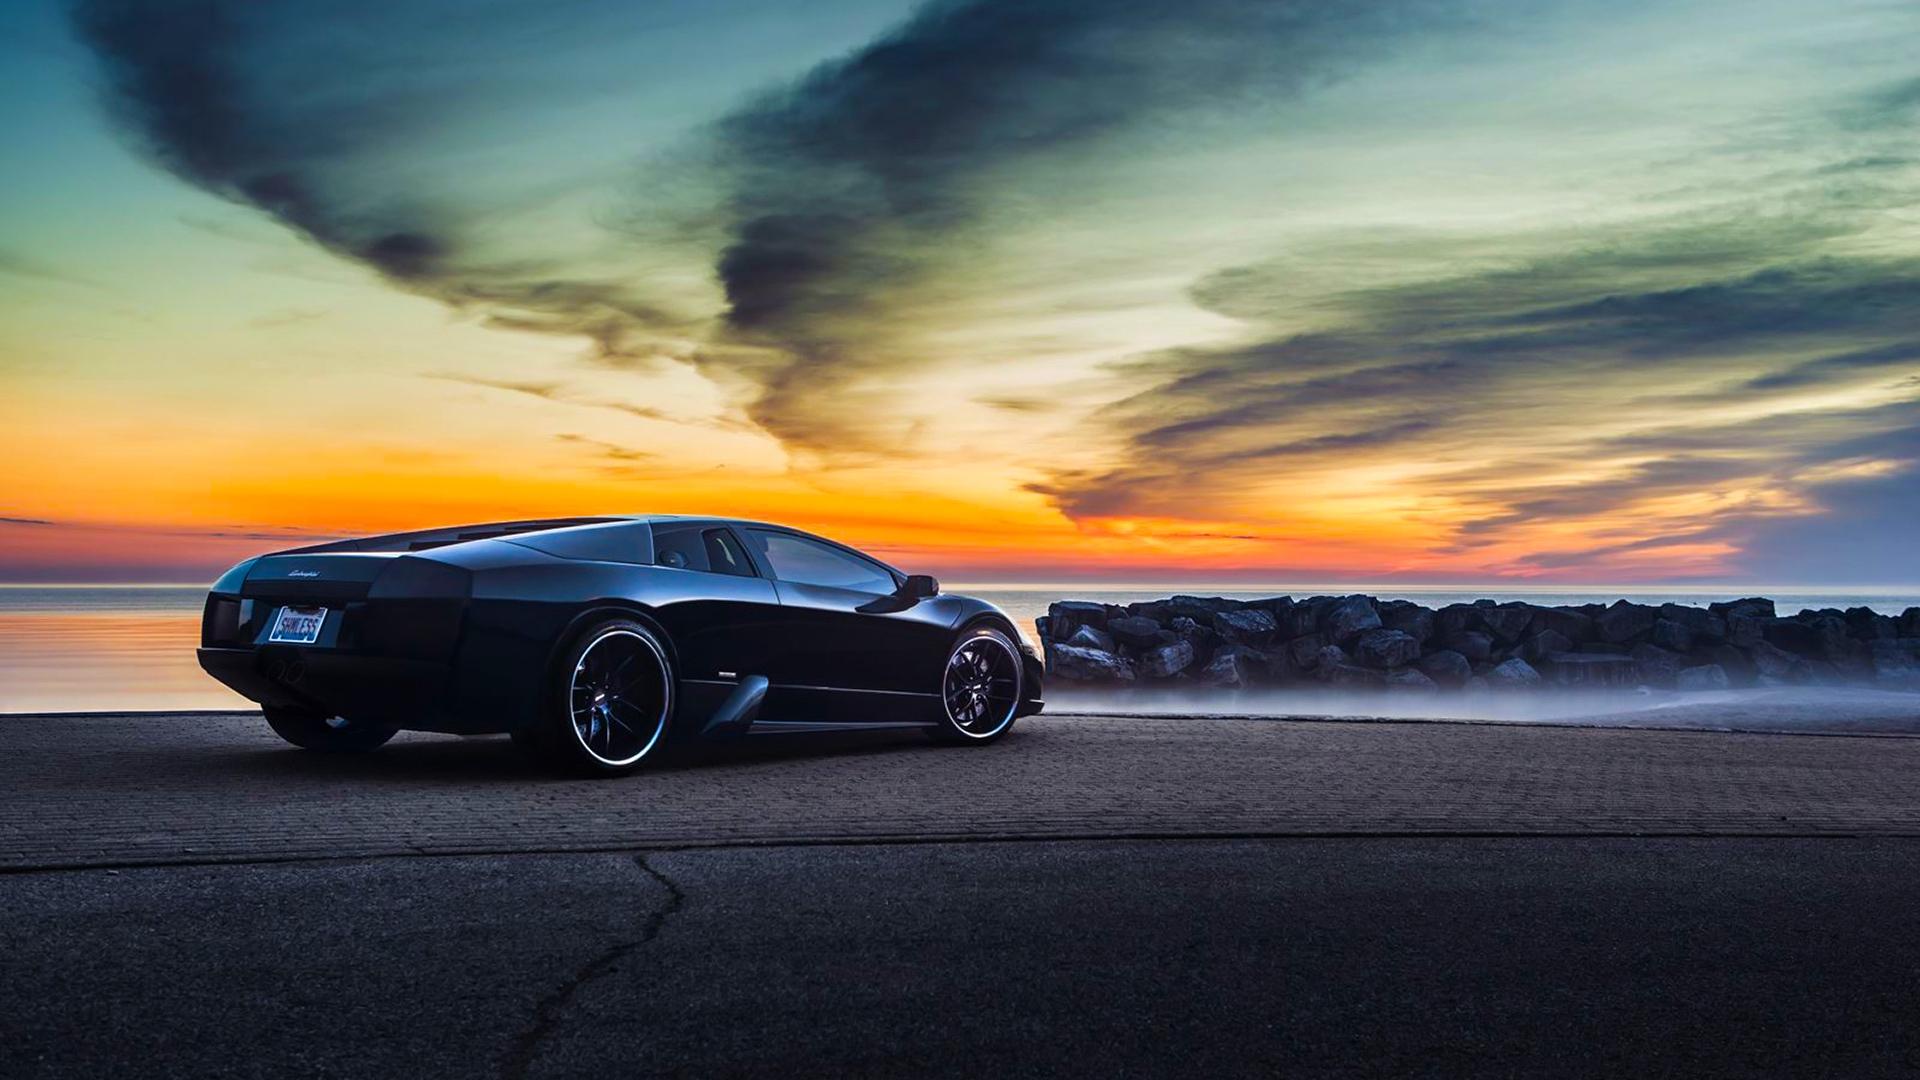 Lamborghini Murcielago Sunset Side View Wallpaper